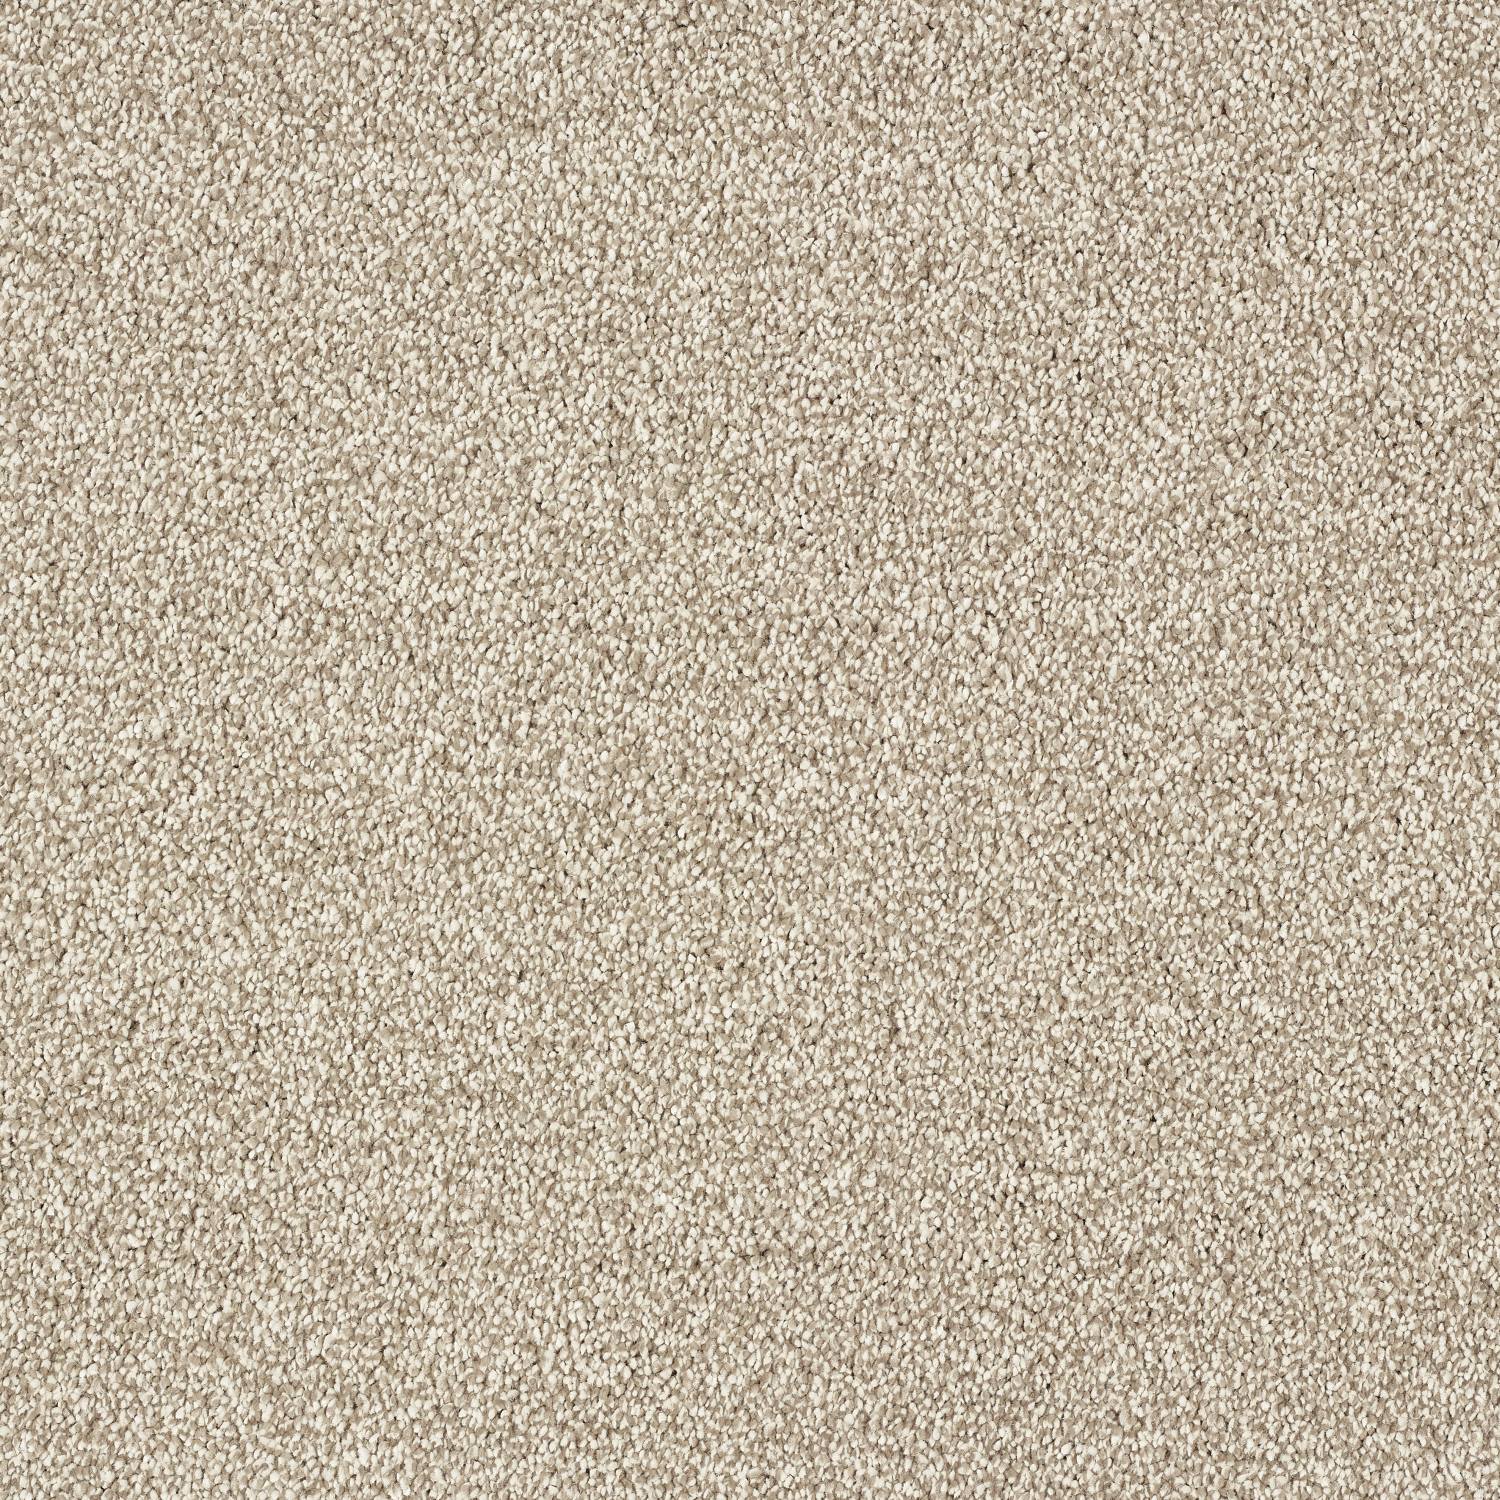 Stainfree Panache Twist Carpet - 02 Nutmeg